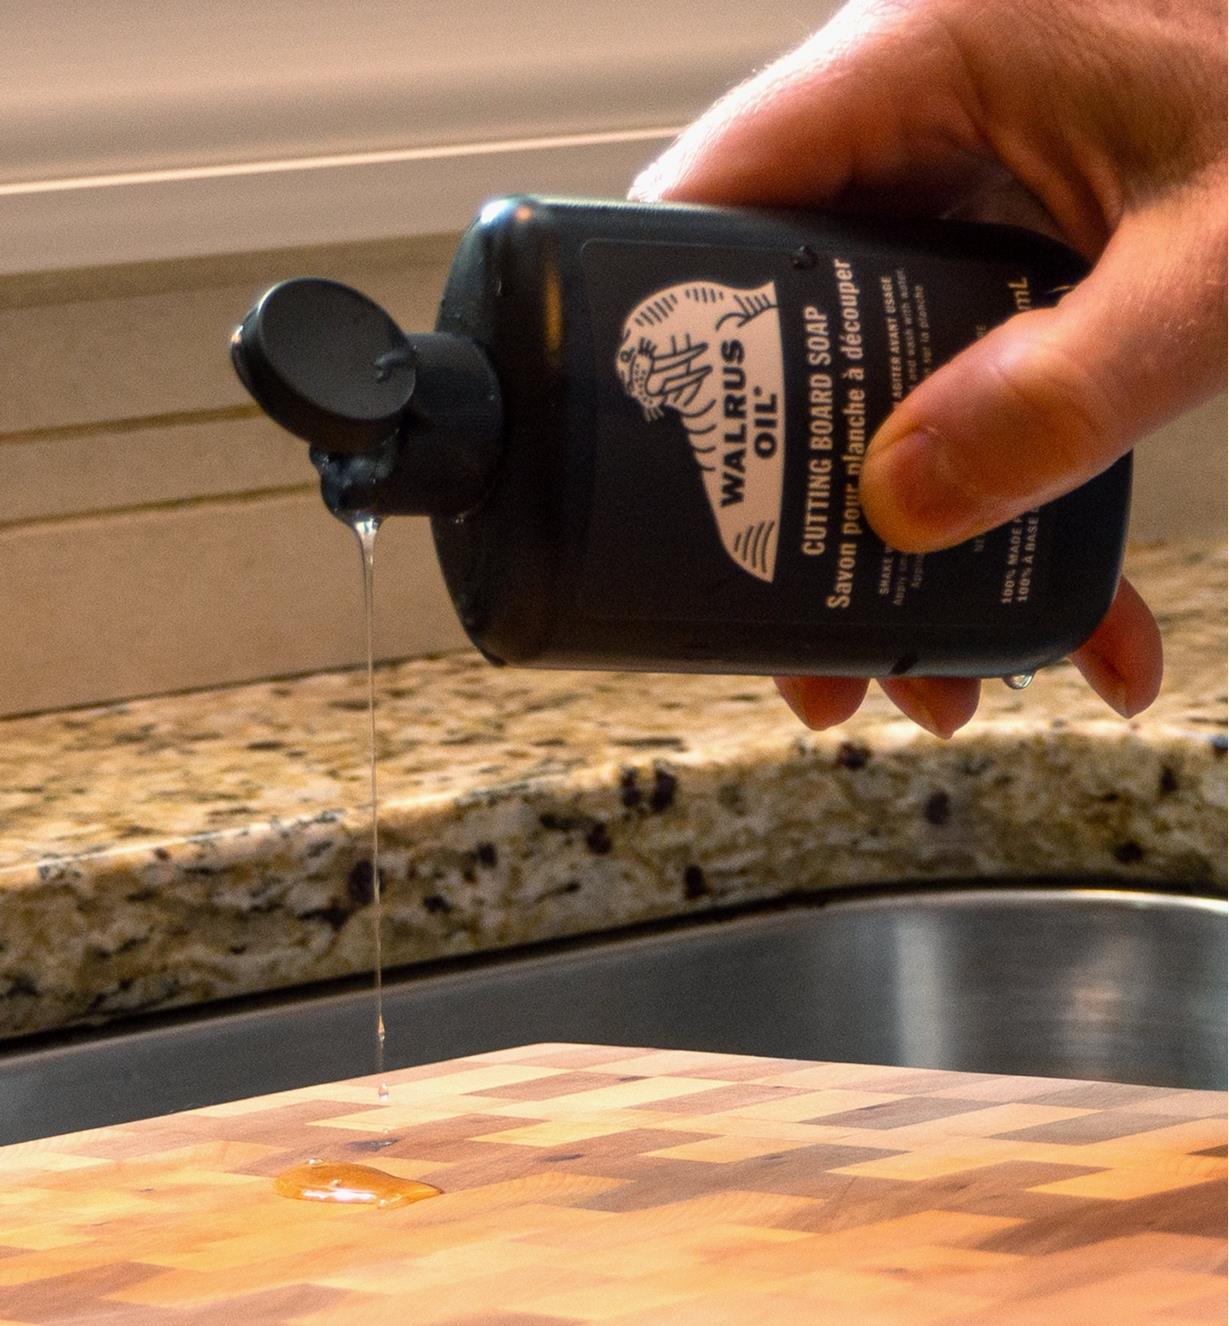 Applying Walrus Oil cutting board soap to a wooden cutting board